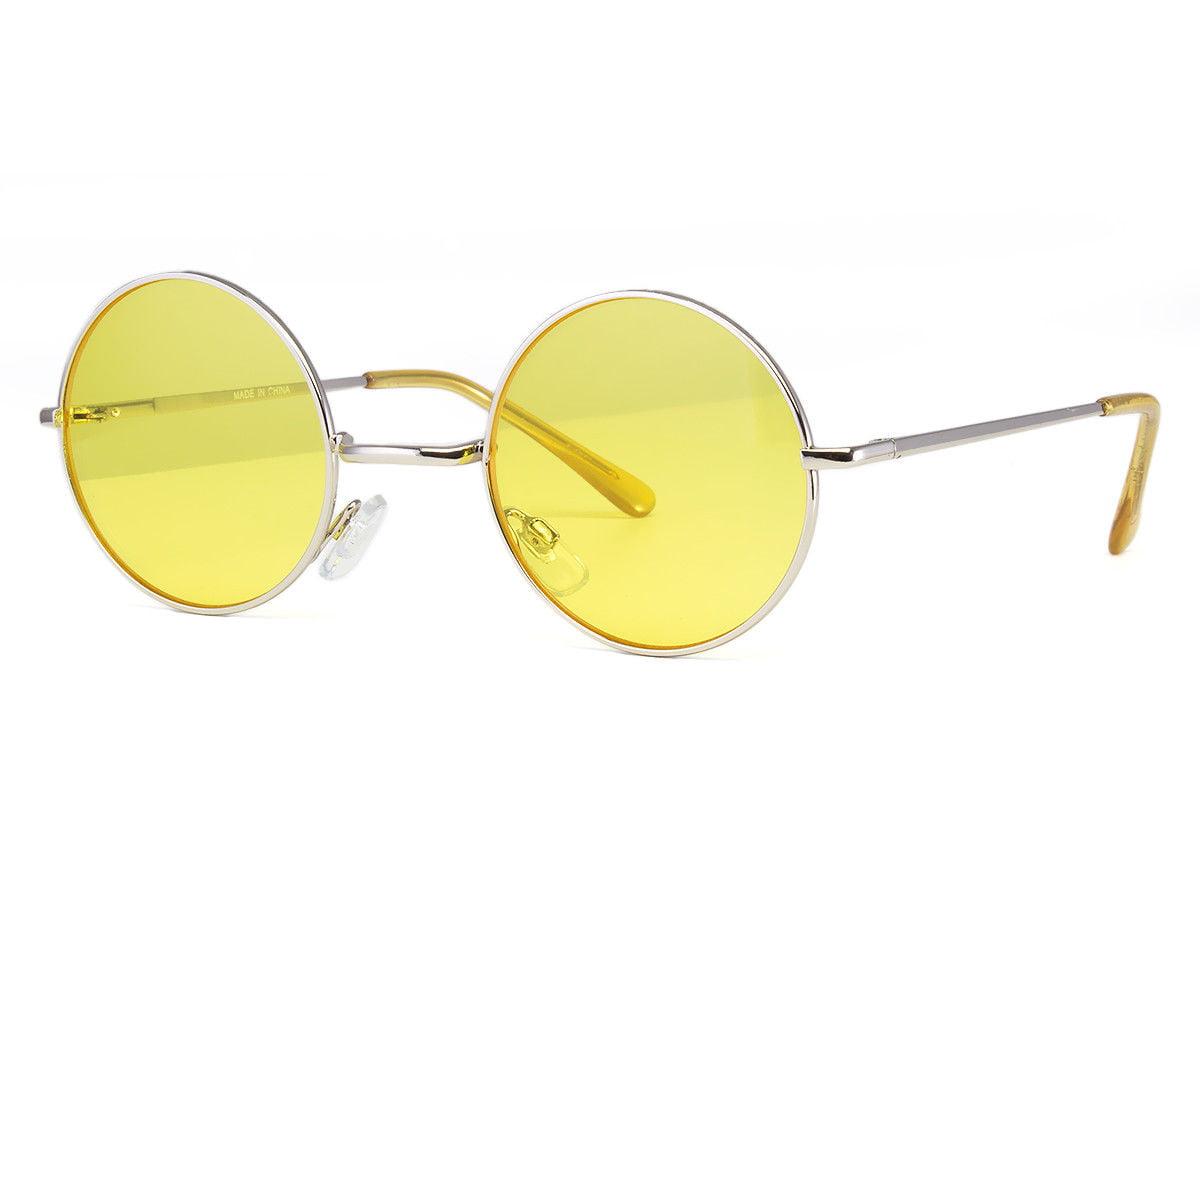 Round Sunglasses John Lennon Style Retro Vintage Classic Circle Round Sunglasses 